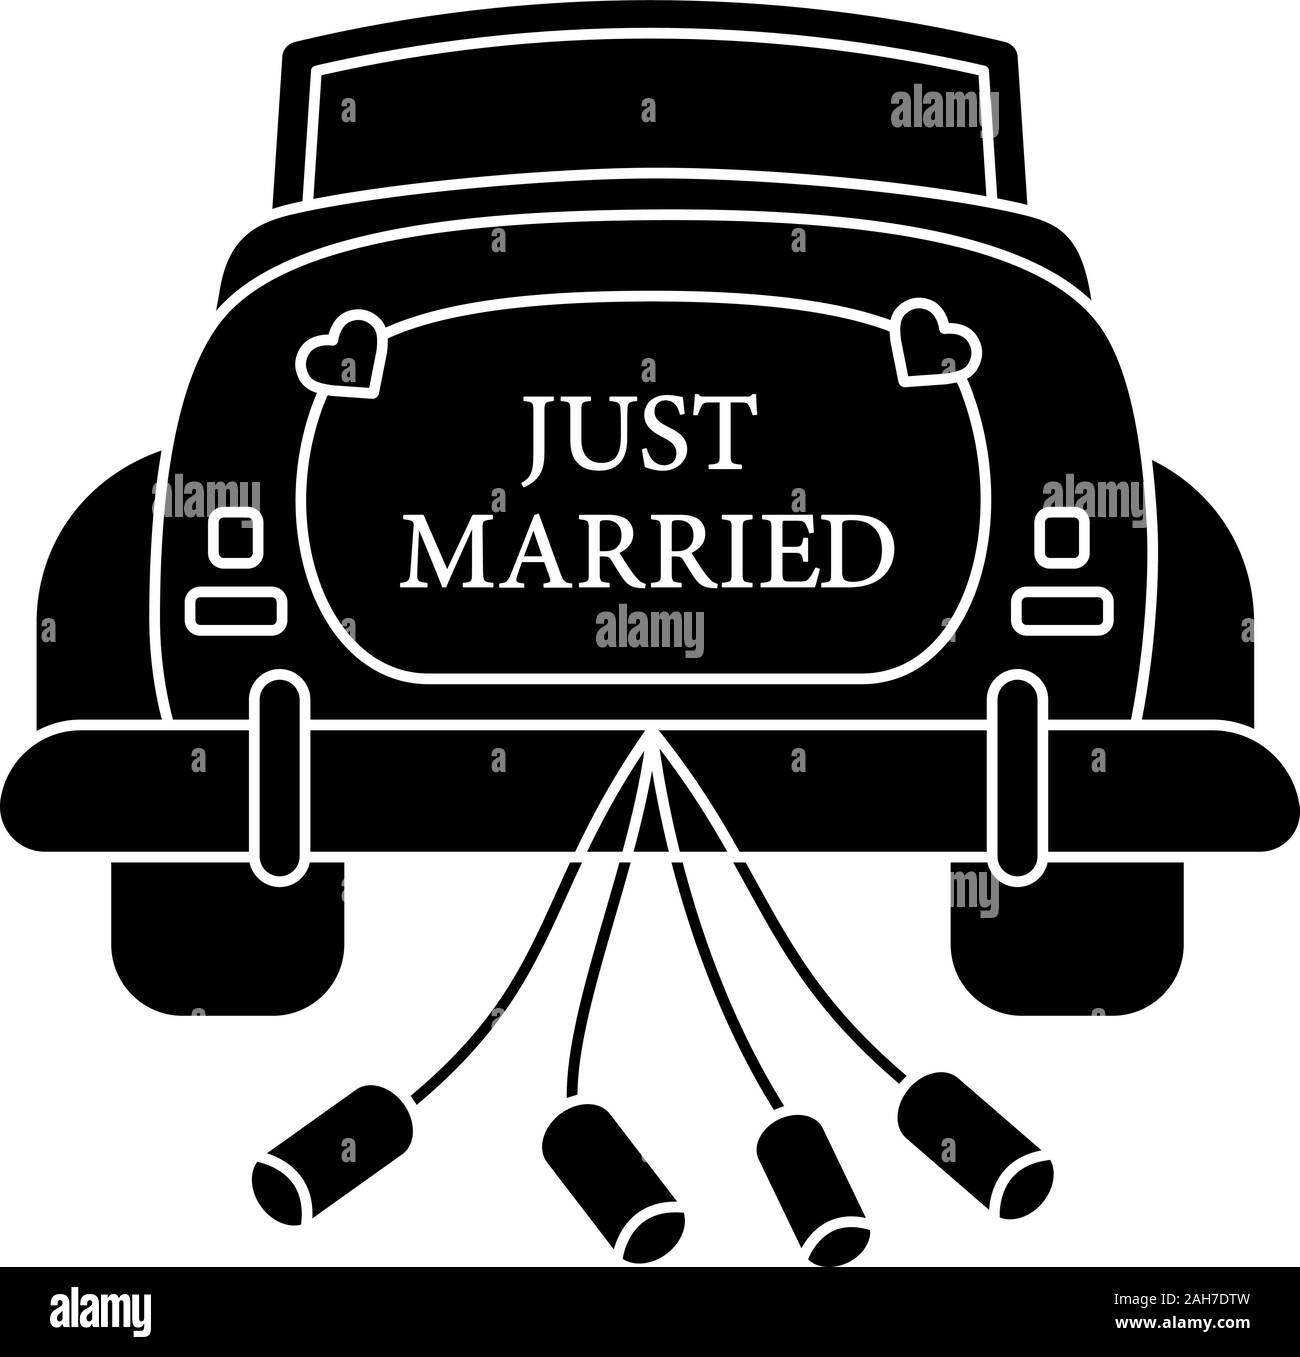 https://c8.alamy.com/comp/2AH7DTW/wedding-car-rental-glyph-icon-rent-auto-just-married-car-newlywed-wedding-vintage-cabriolet-automobile-hiring-services-silhouette-symbol-negati-2AH7DTW.jpg